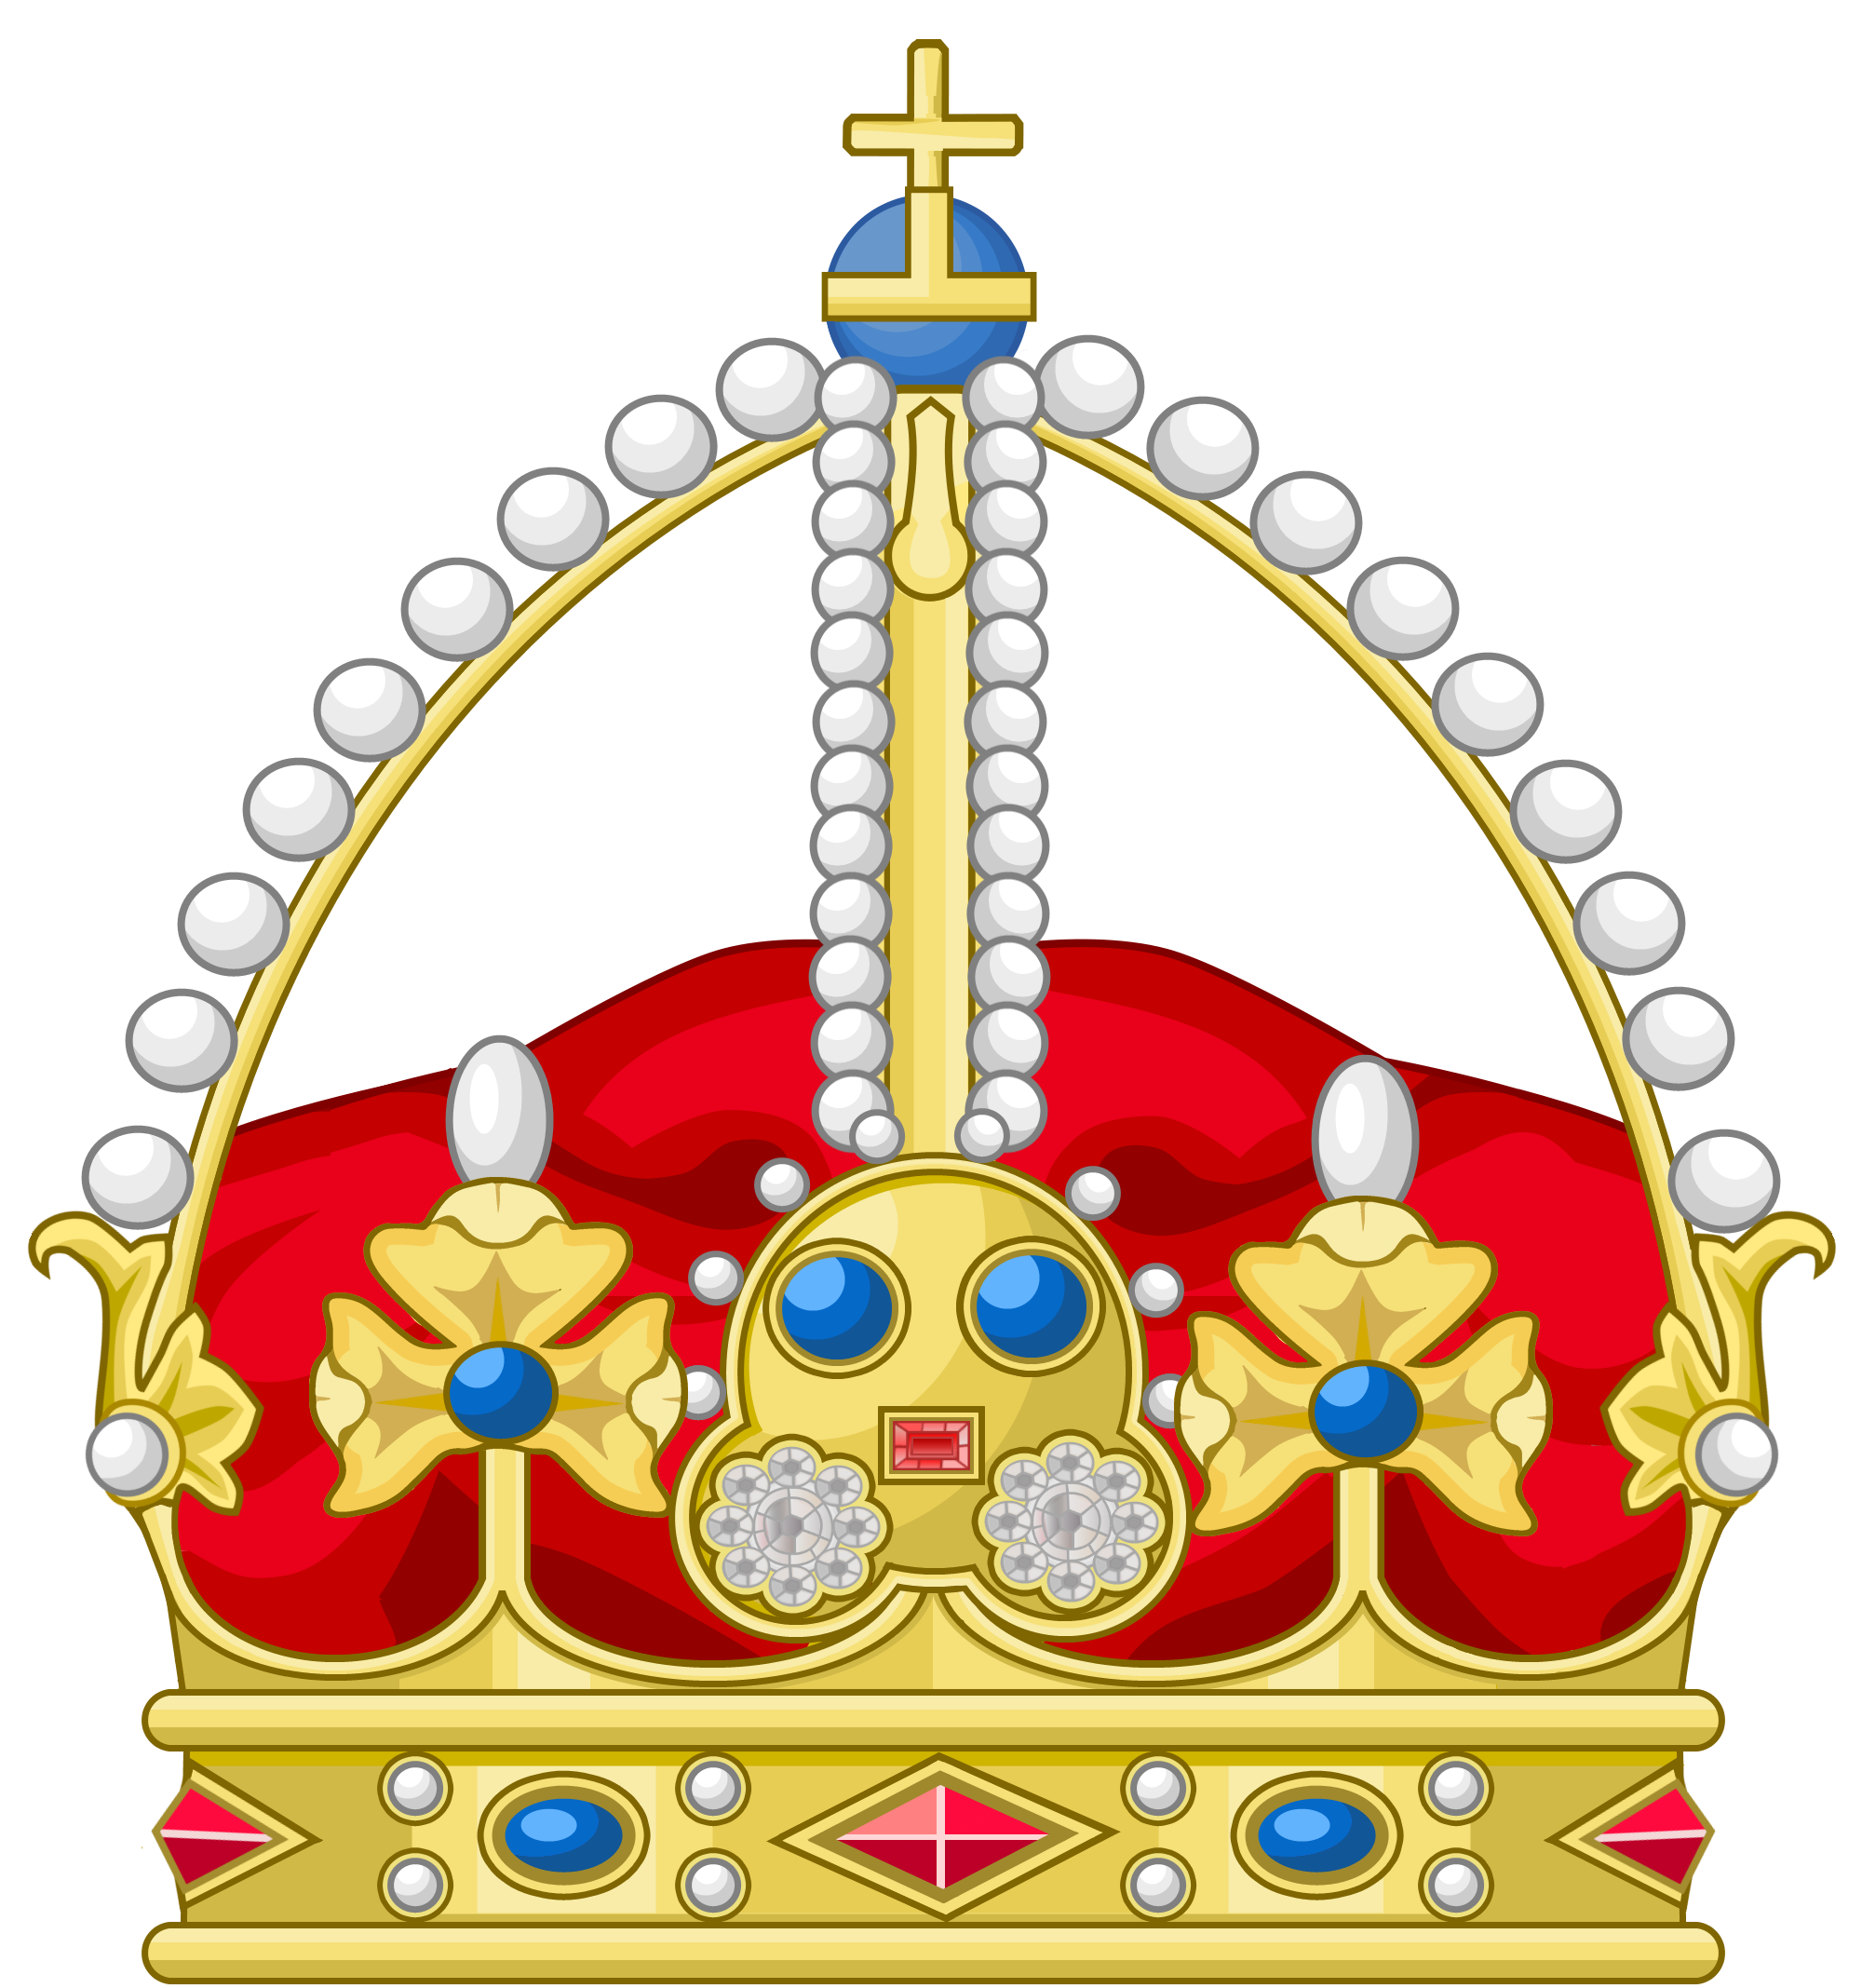 file-royal-crown-of-gotzborg-heraldry-png-micraswiki